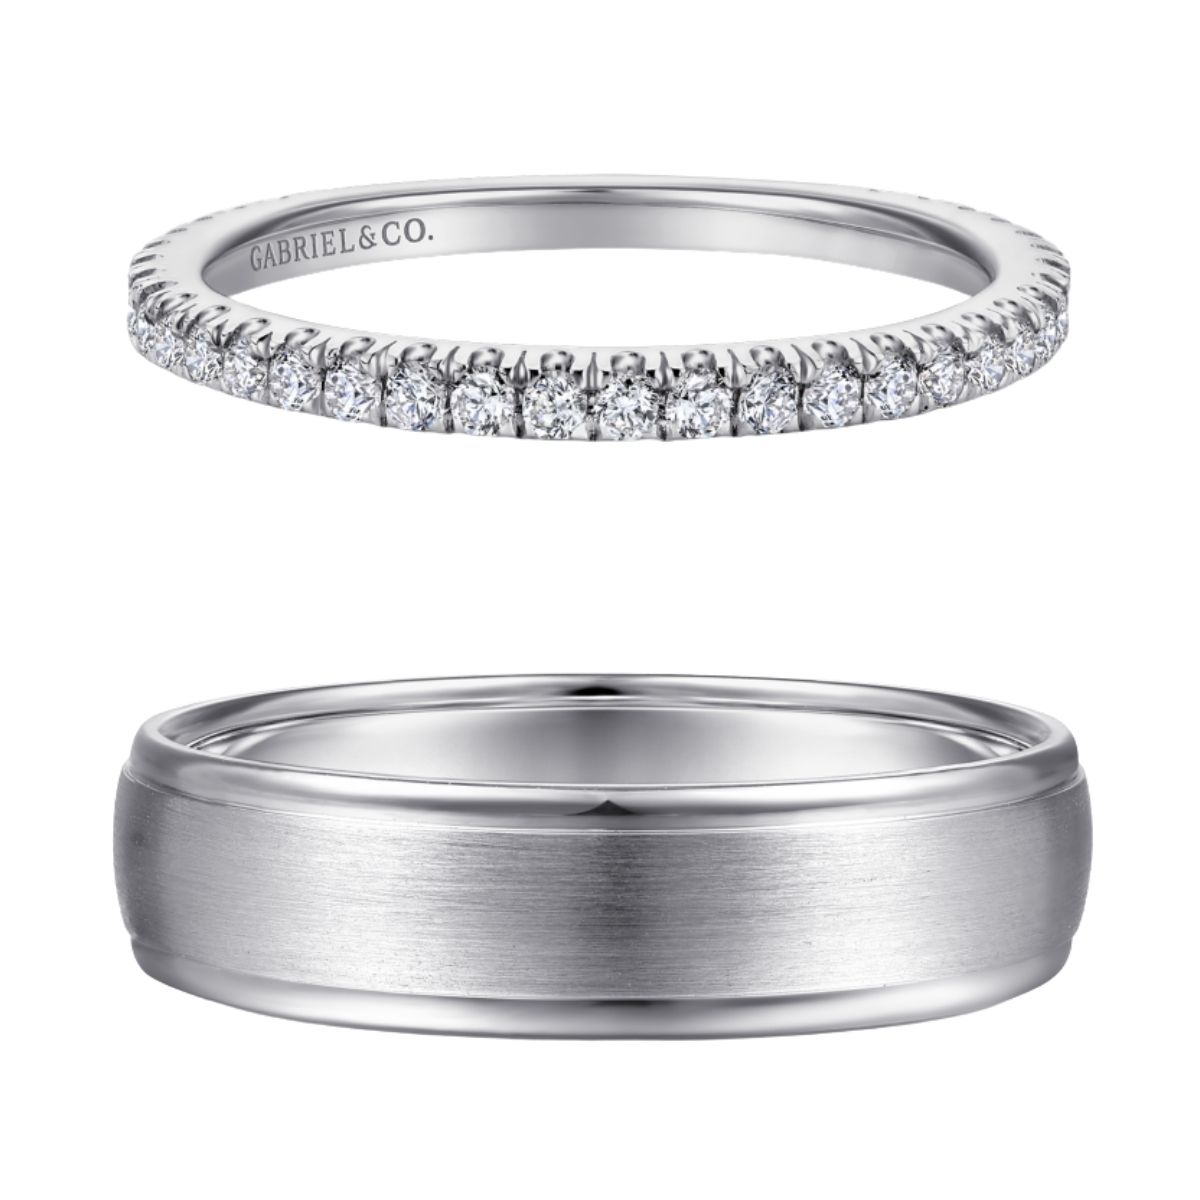 women's pave diamond wedding ring with matching men's polished wedding ring